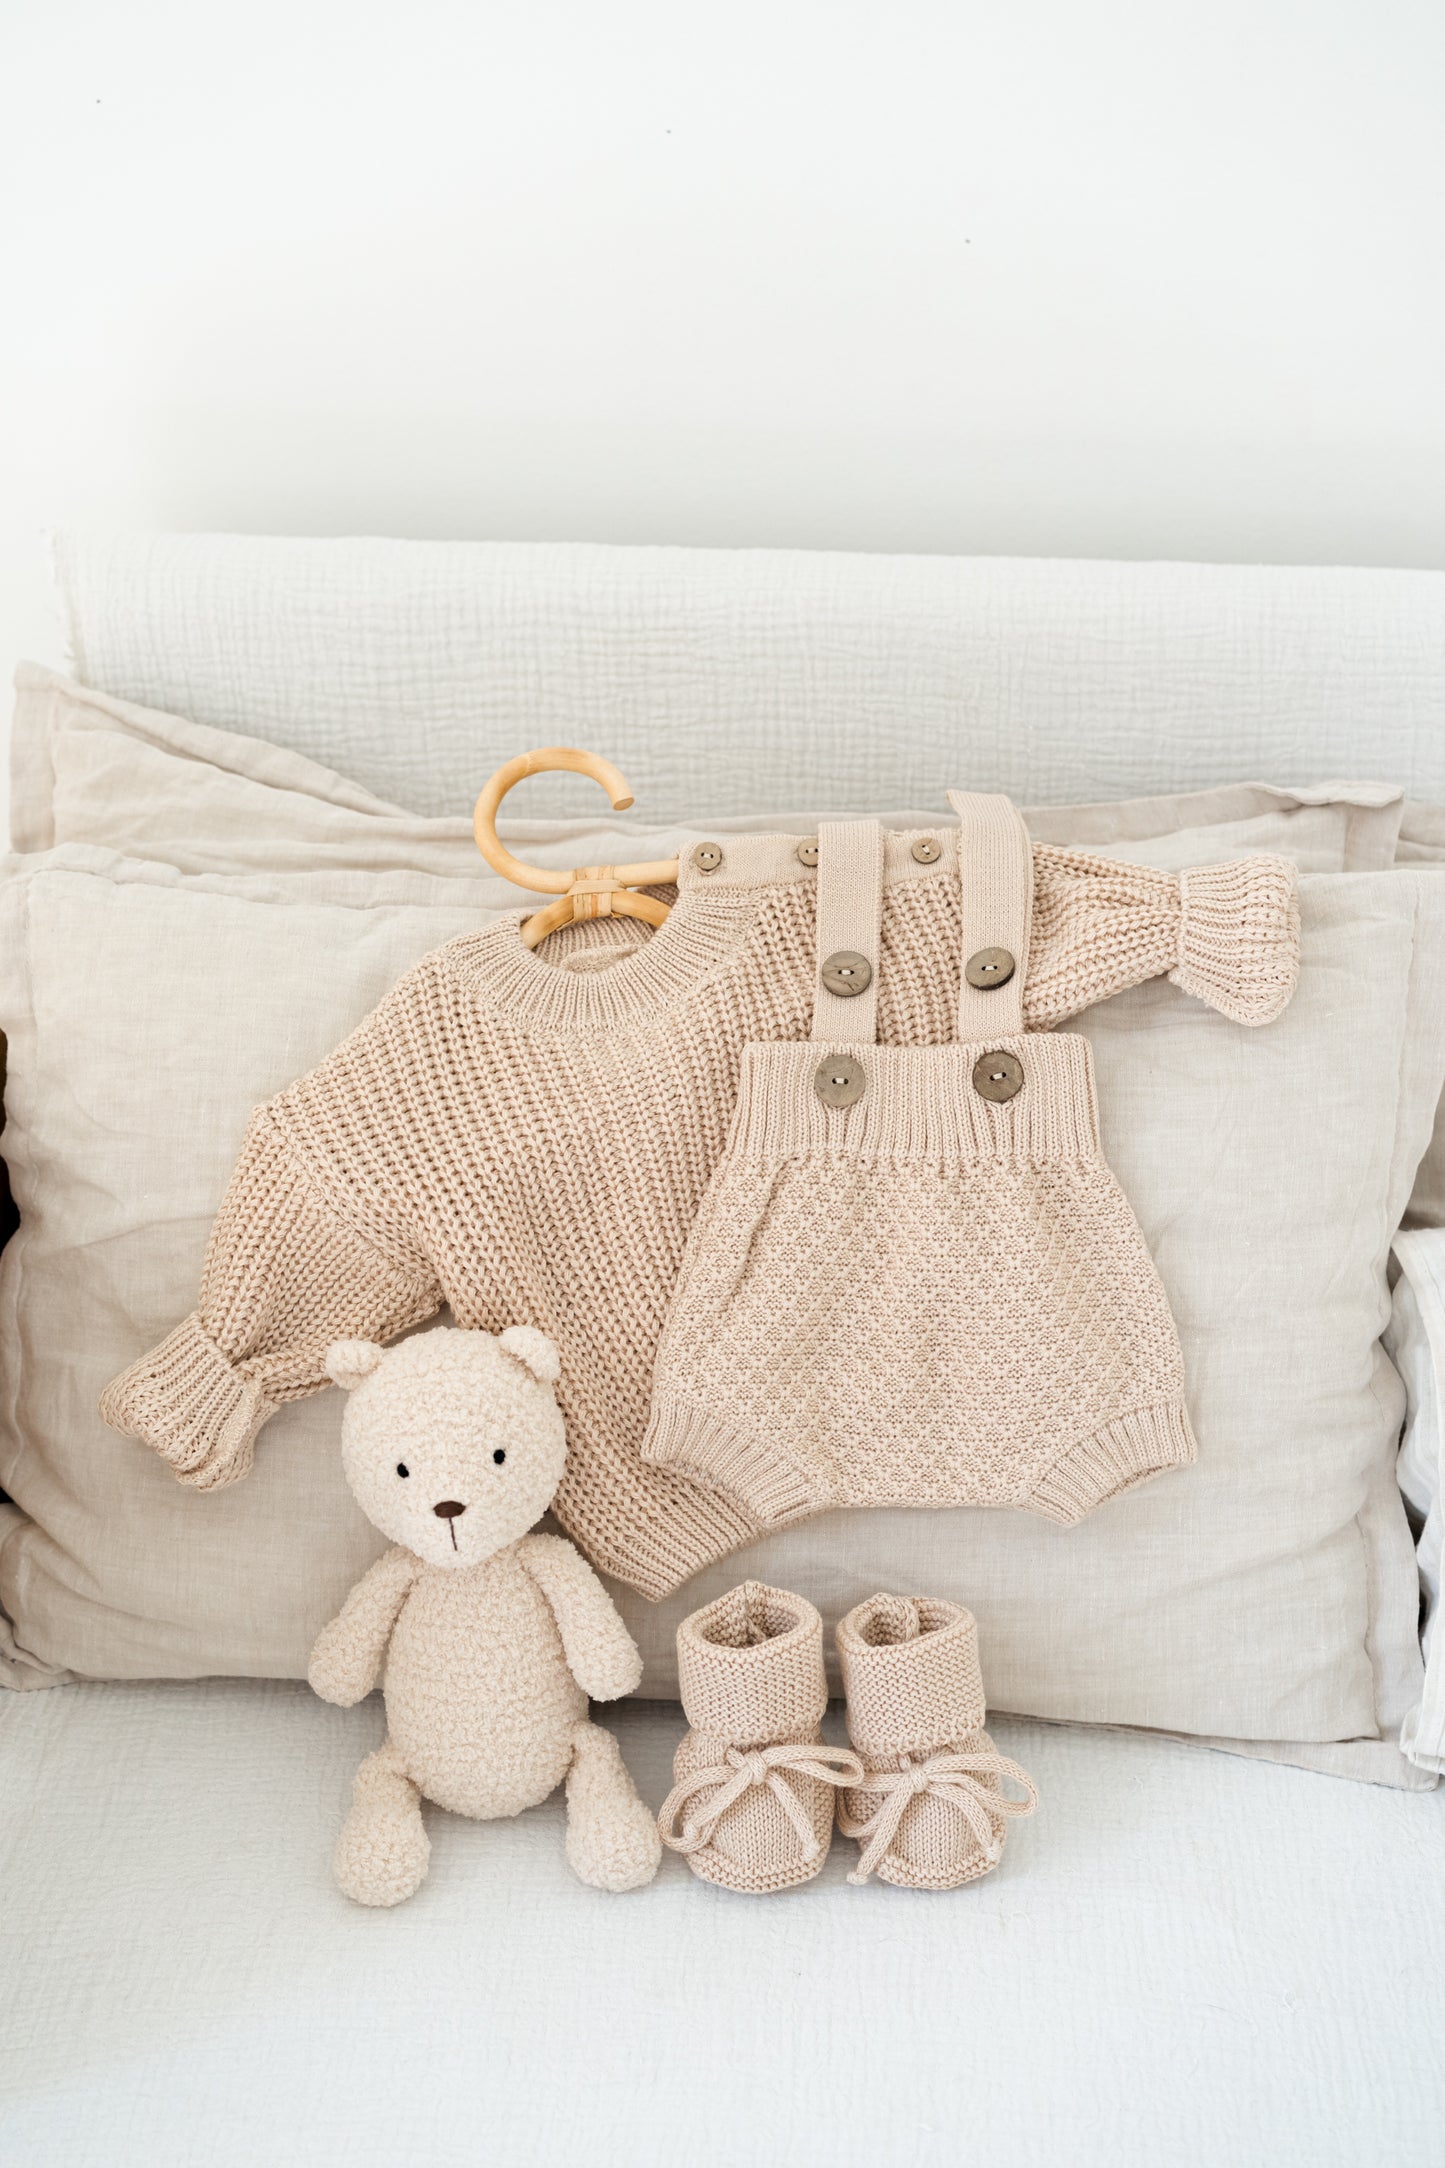 Baby and Mama Gift Box | knit newborn outfit & baby keepsake box